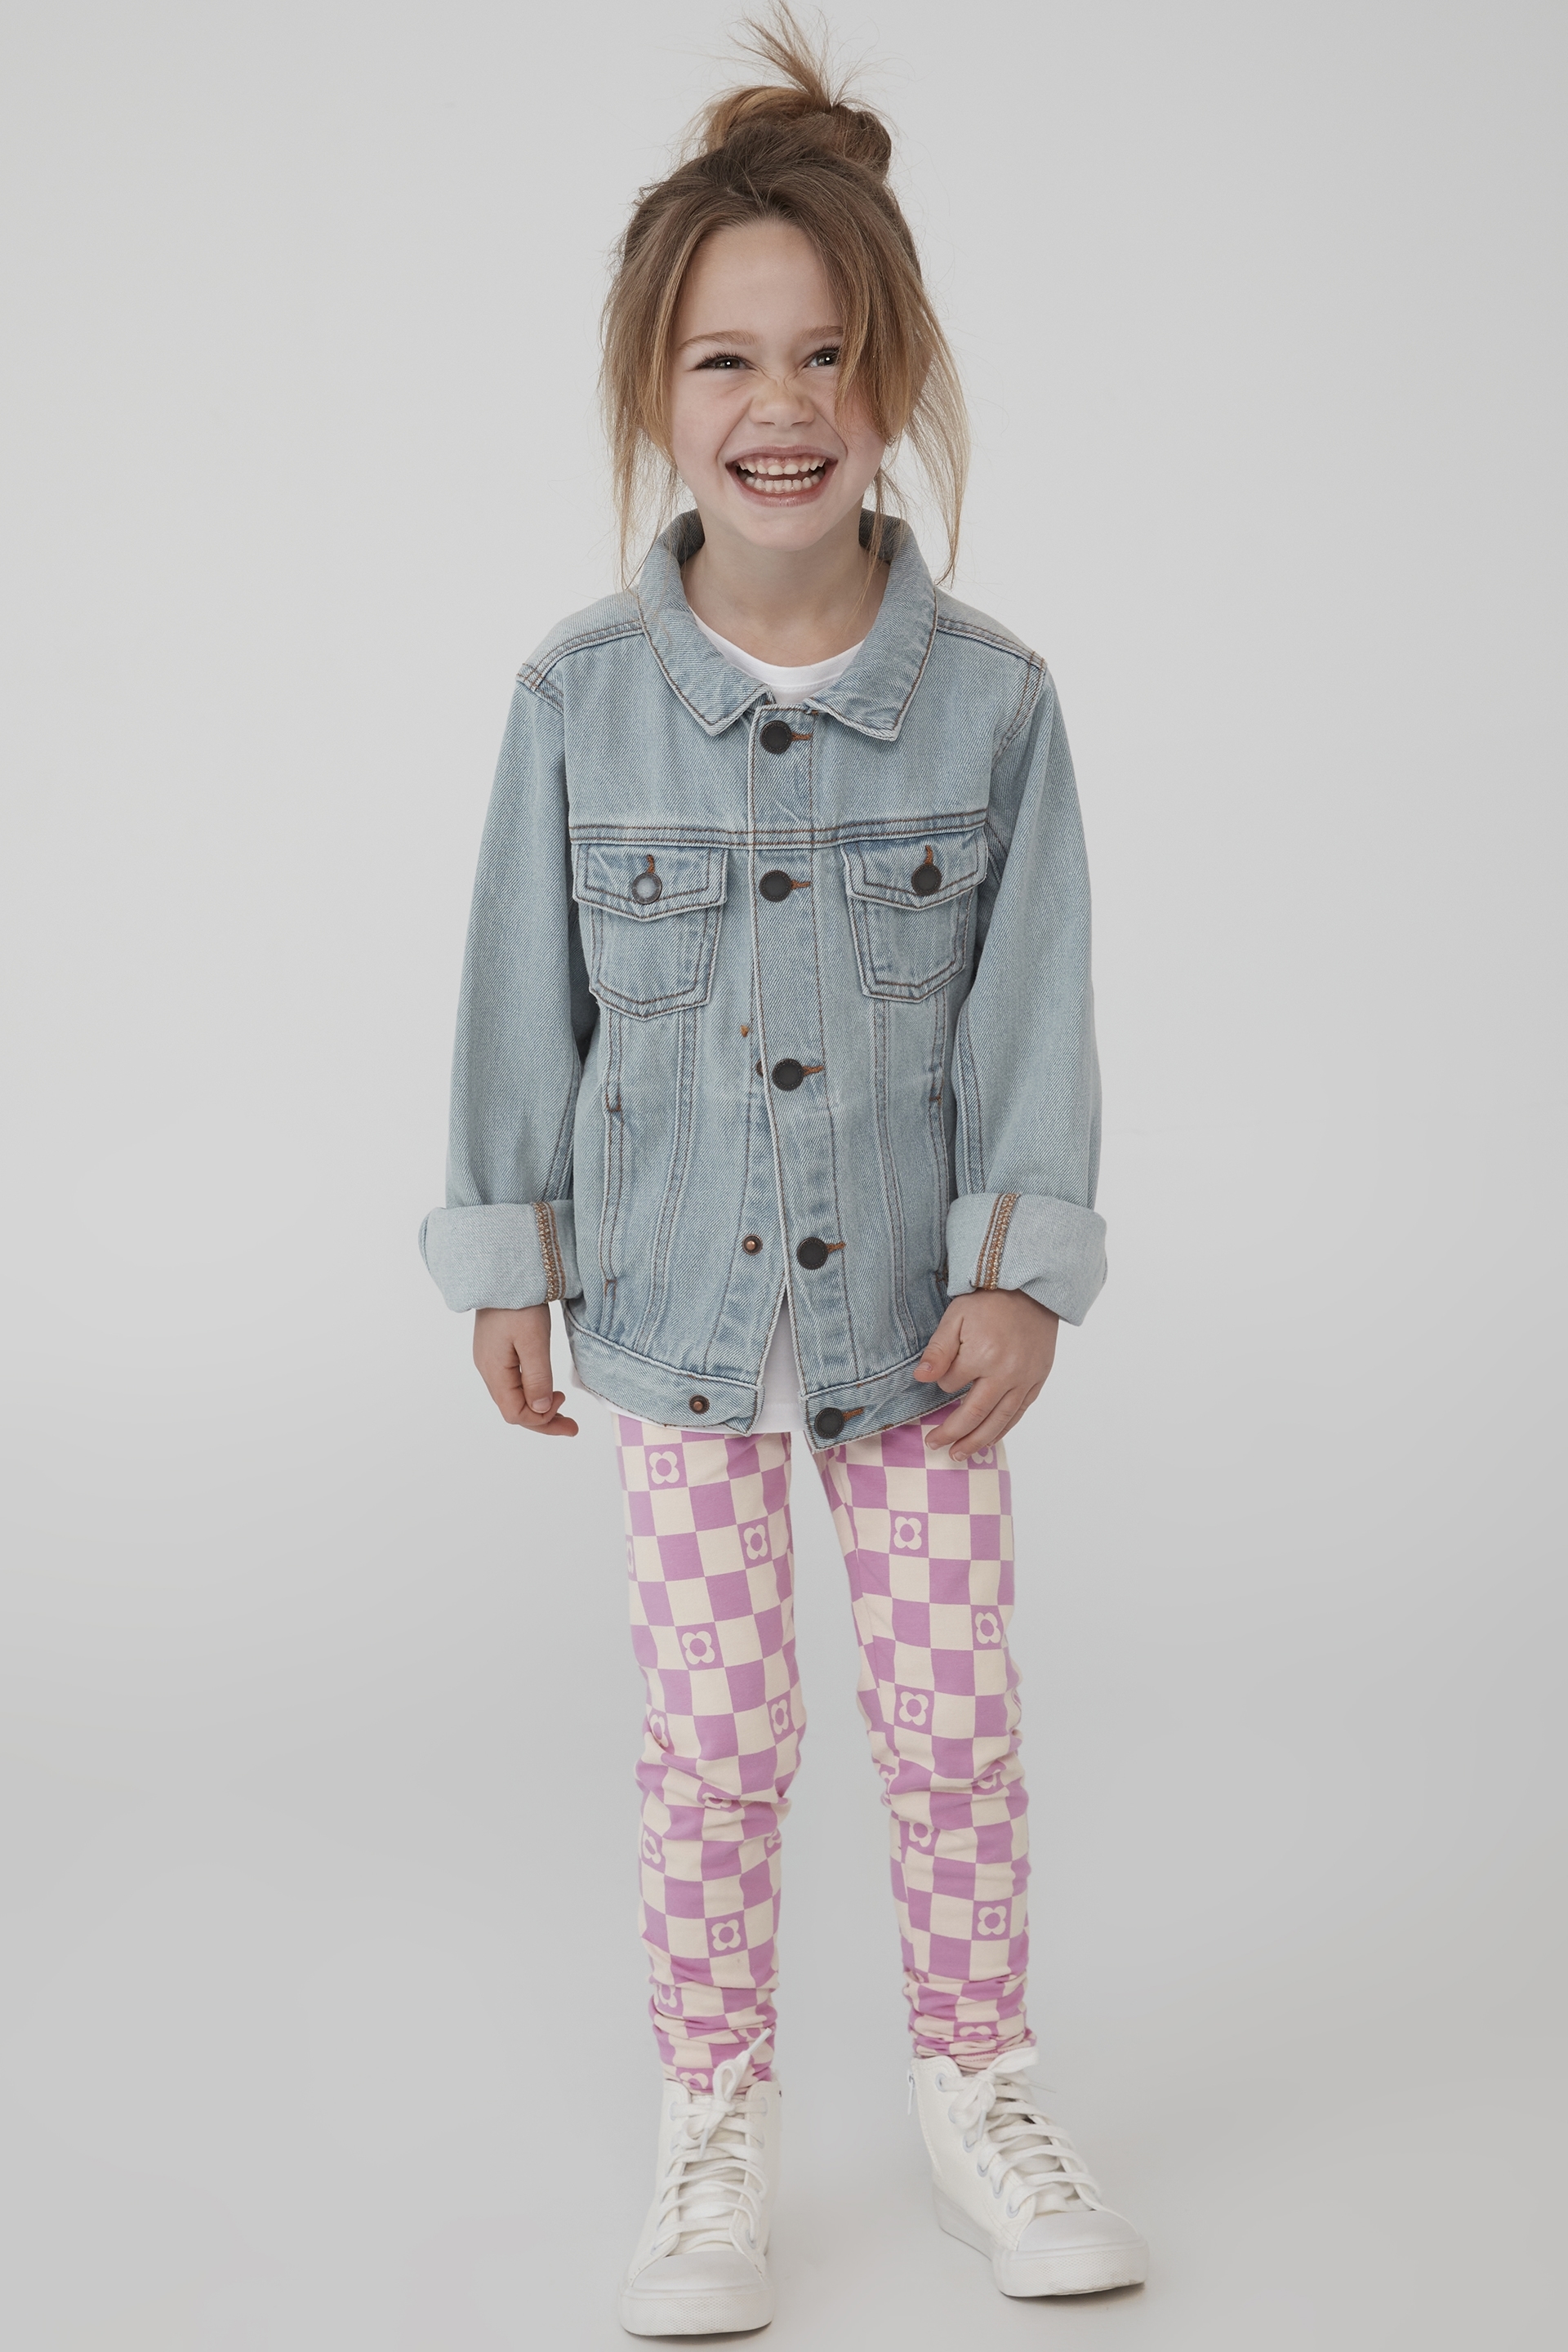 Cotton On Kids - Huggie Tights - Pink gerbera/coogee checkerboard